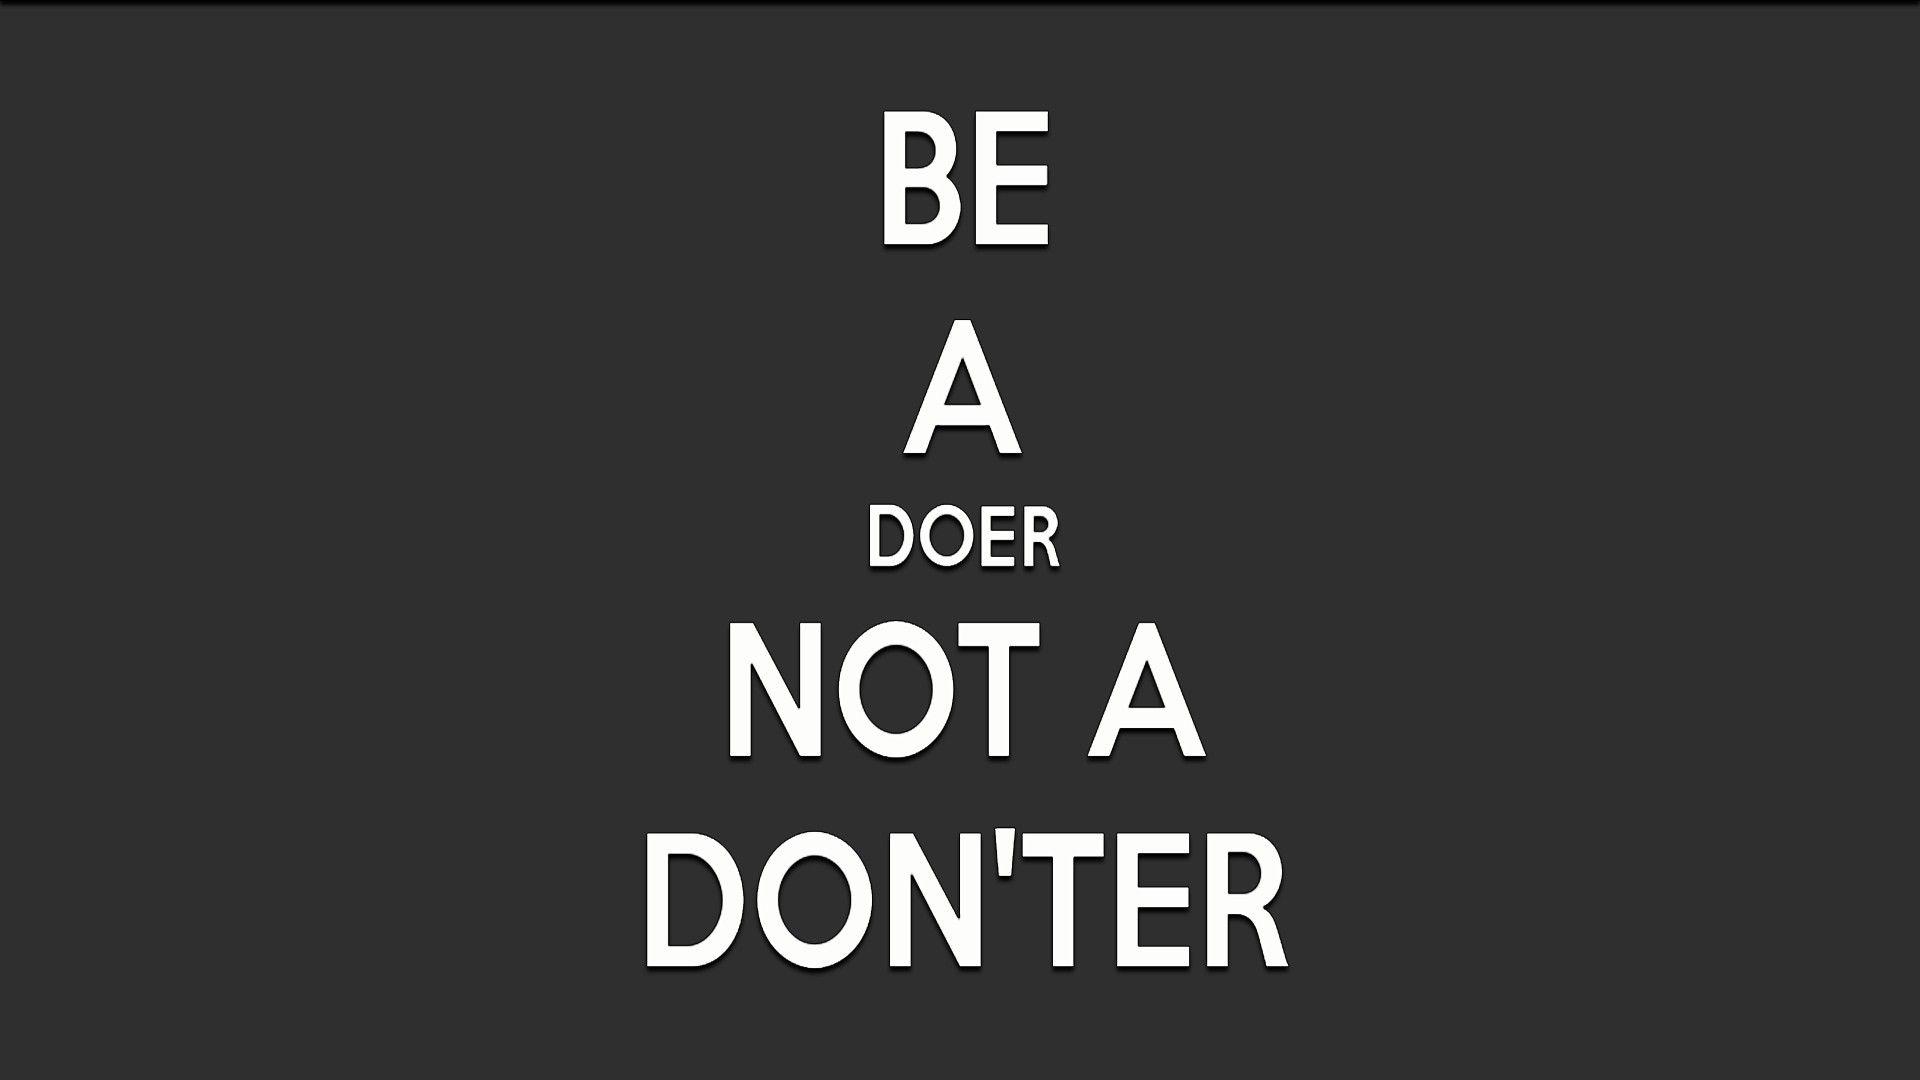 Be A Doer Not a Donter, HD Inspiration, 4k Wallpaper, Image